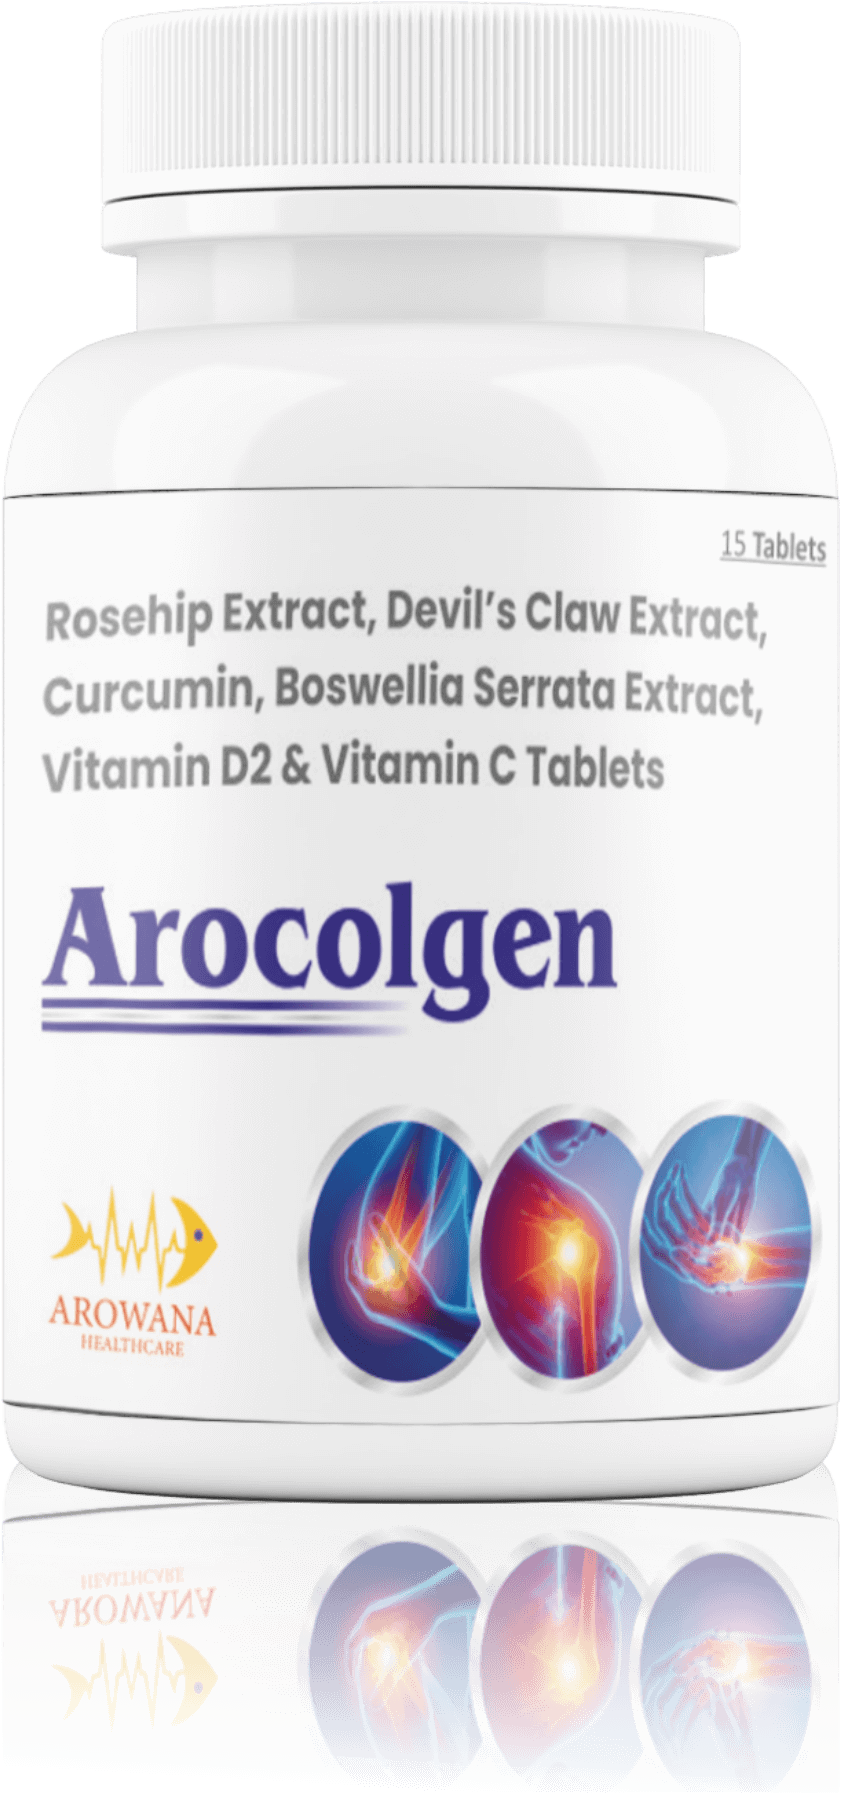 Arocolgen Tablets